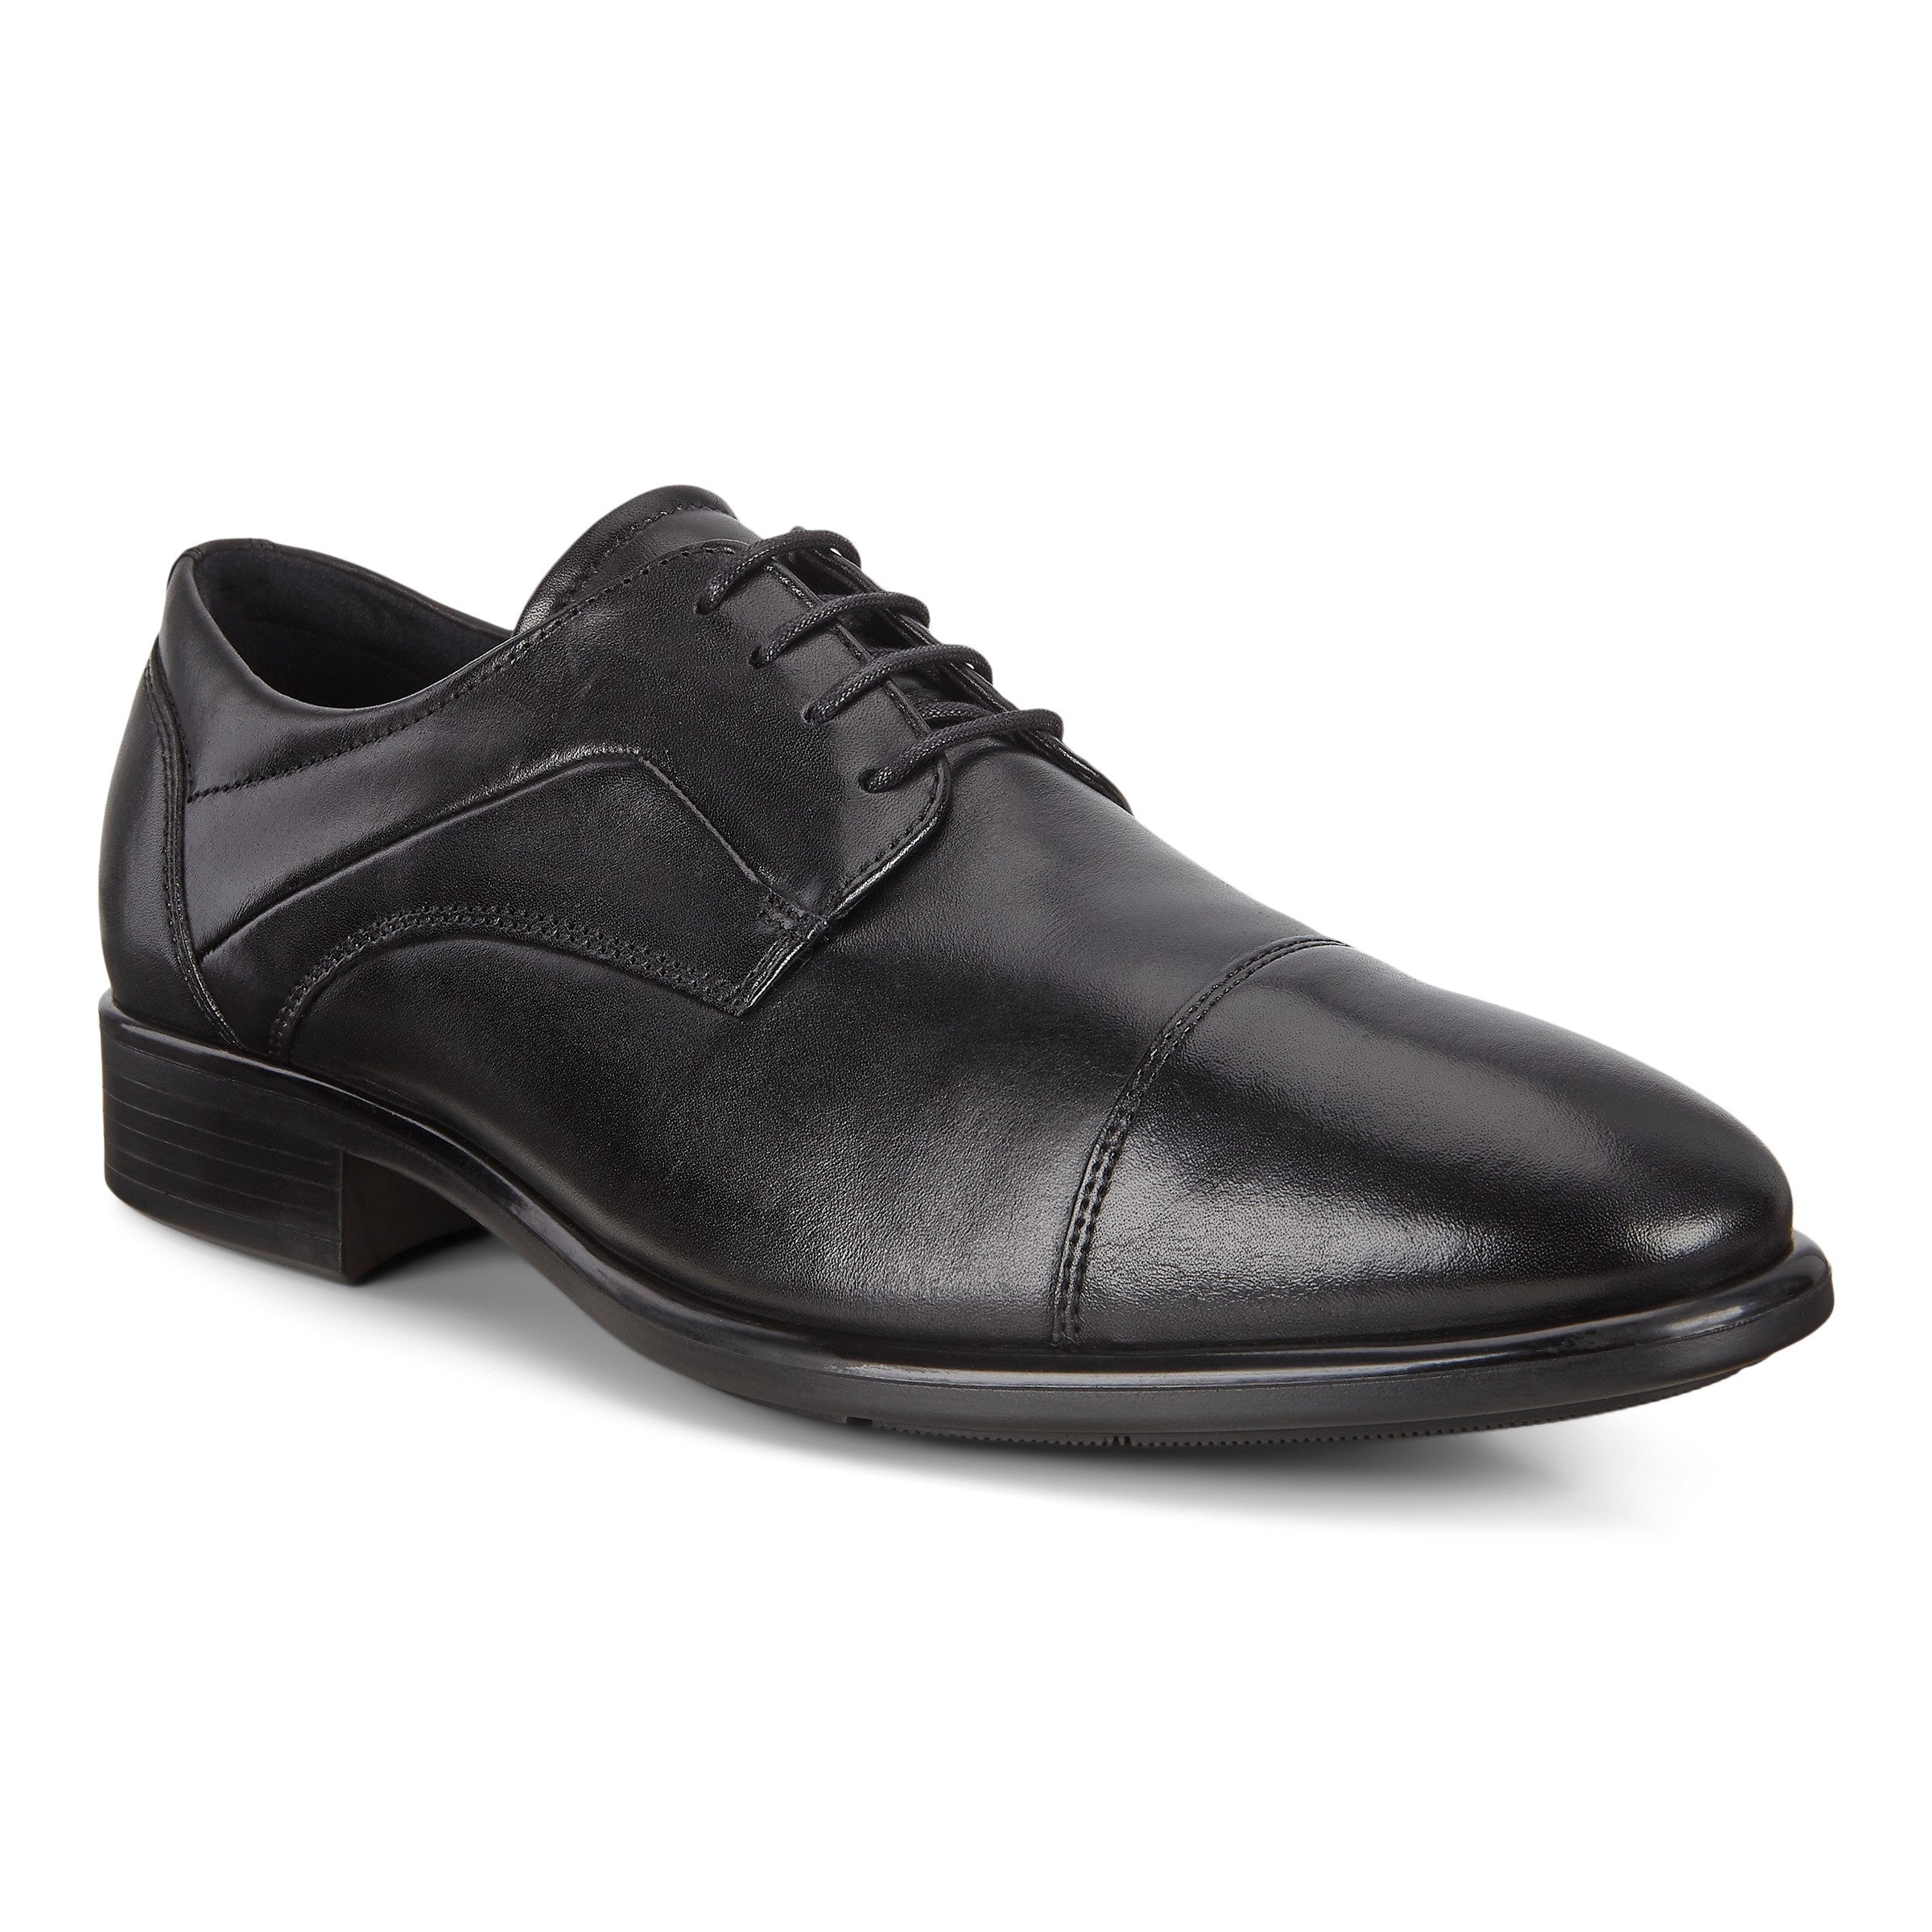 Nereus Black & White Half Shoes Soft Leather Shoes  Half shoes, Black  formal shoes men, Leather shoes men